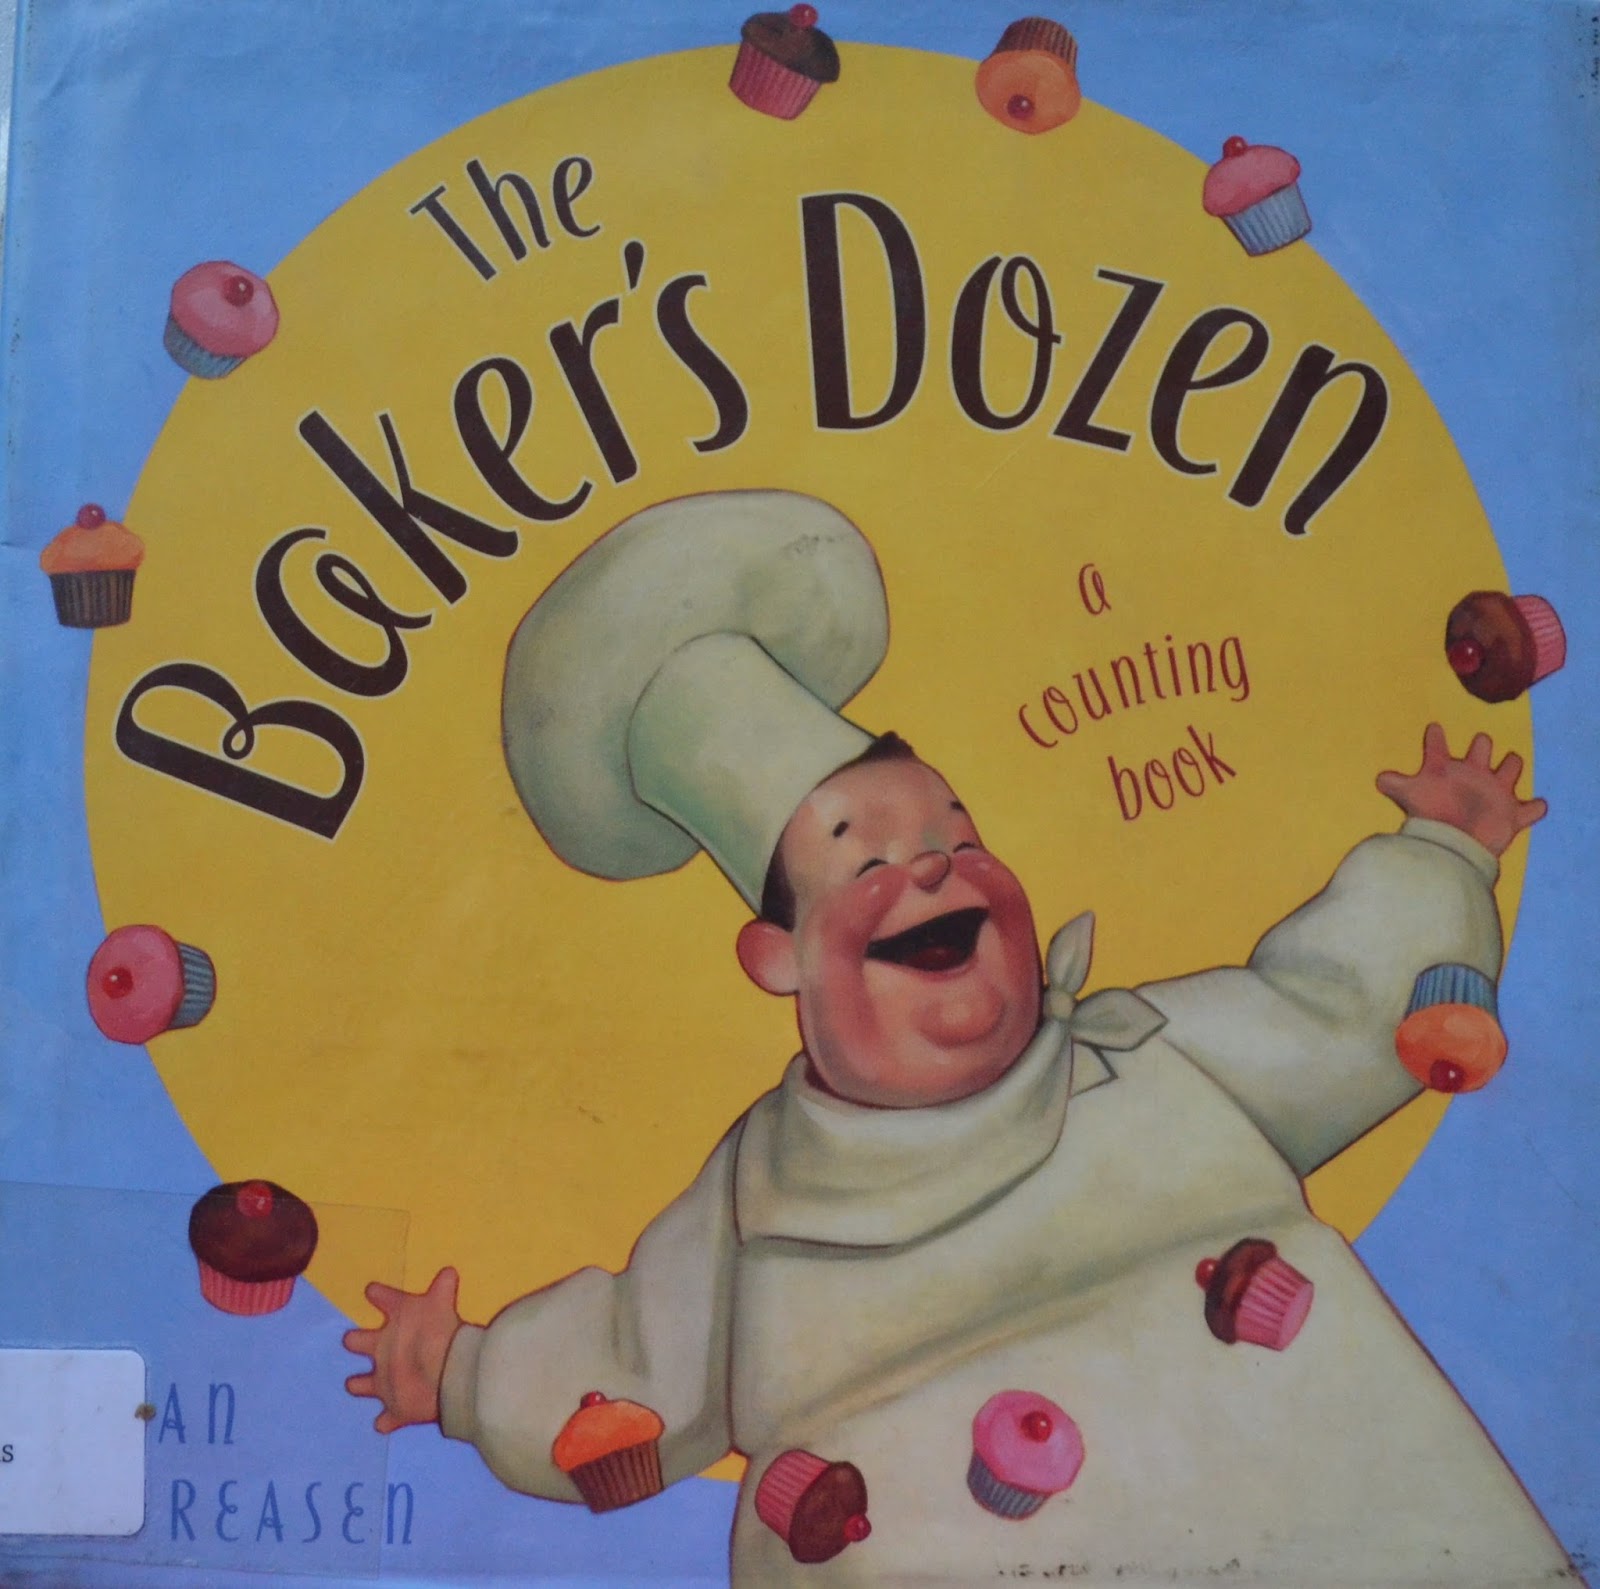 It s the good book. Сказка "the Baker s dozen". Paul King - a Baker's dozen (2020). Dozen перевод. Сказка "the Baker s dozen" текст и перевод.